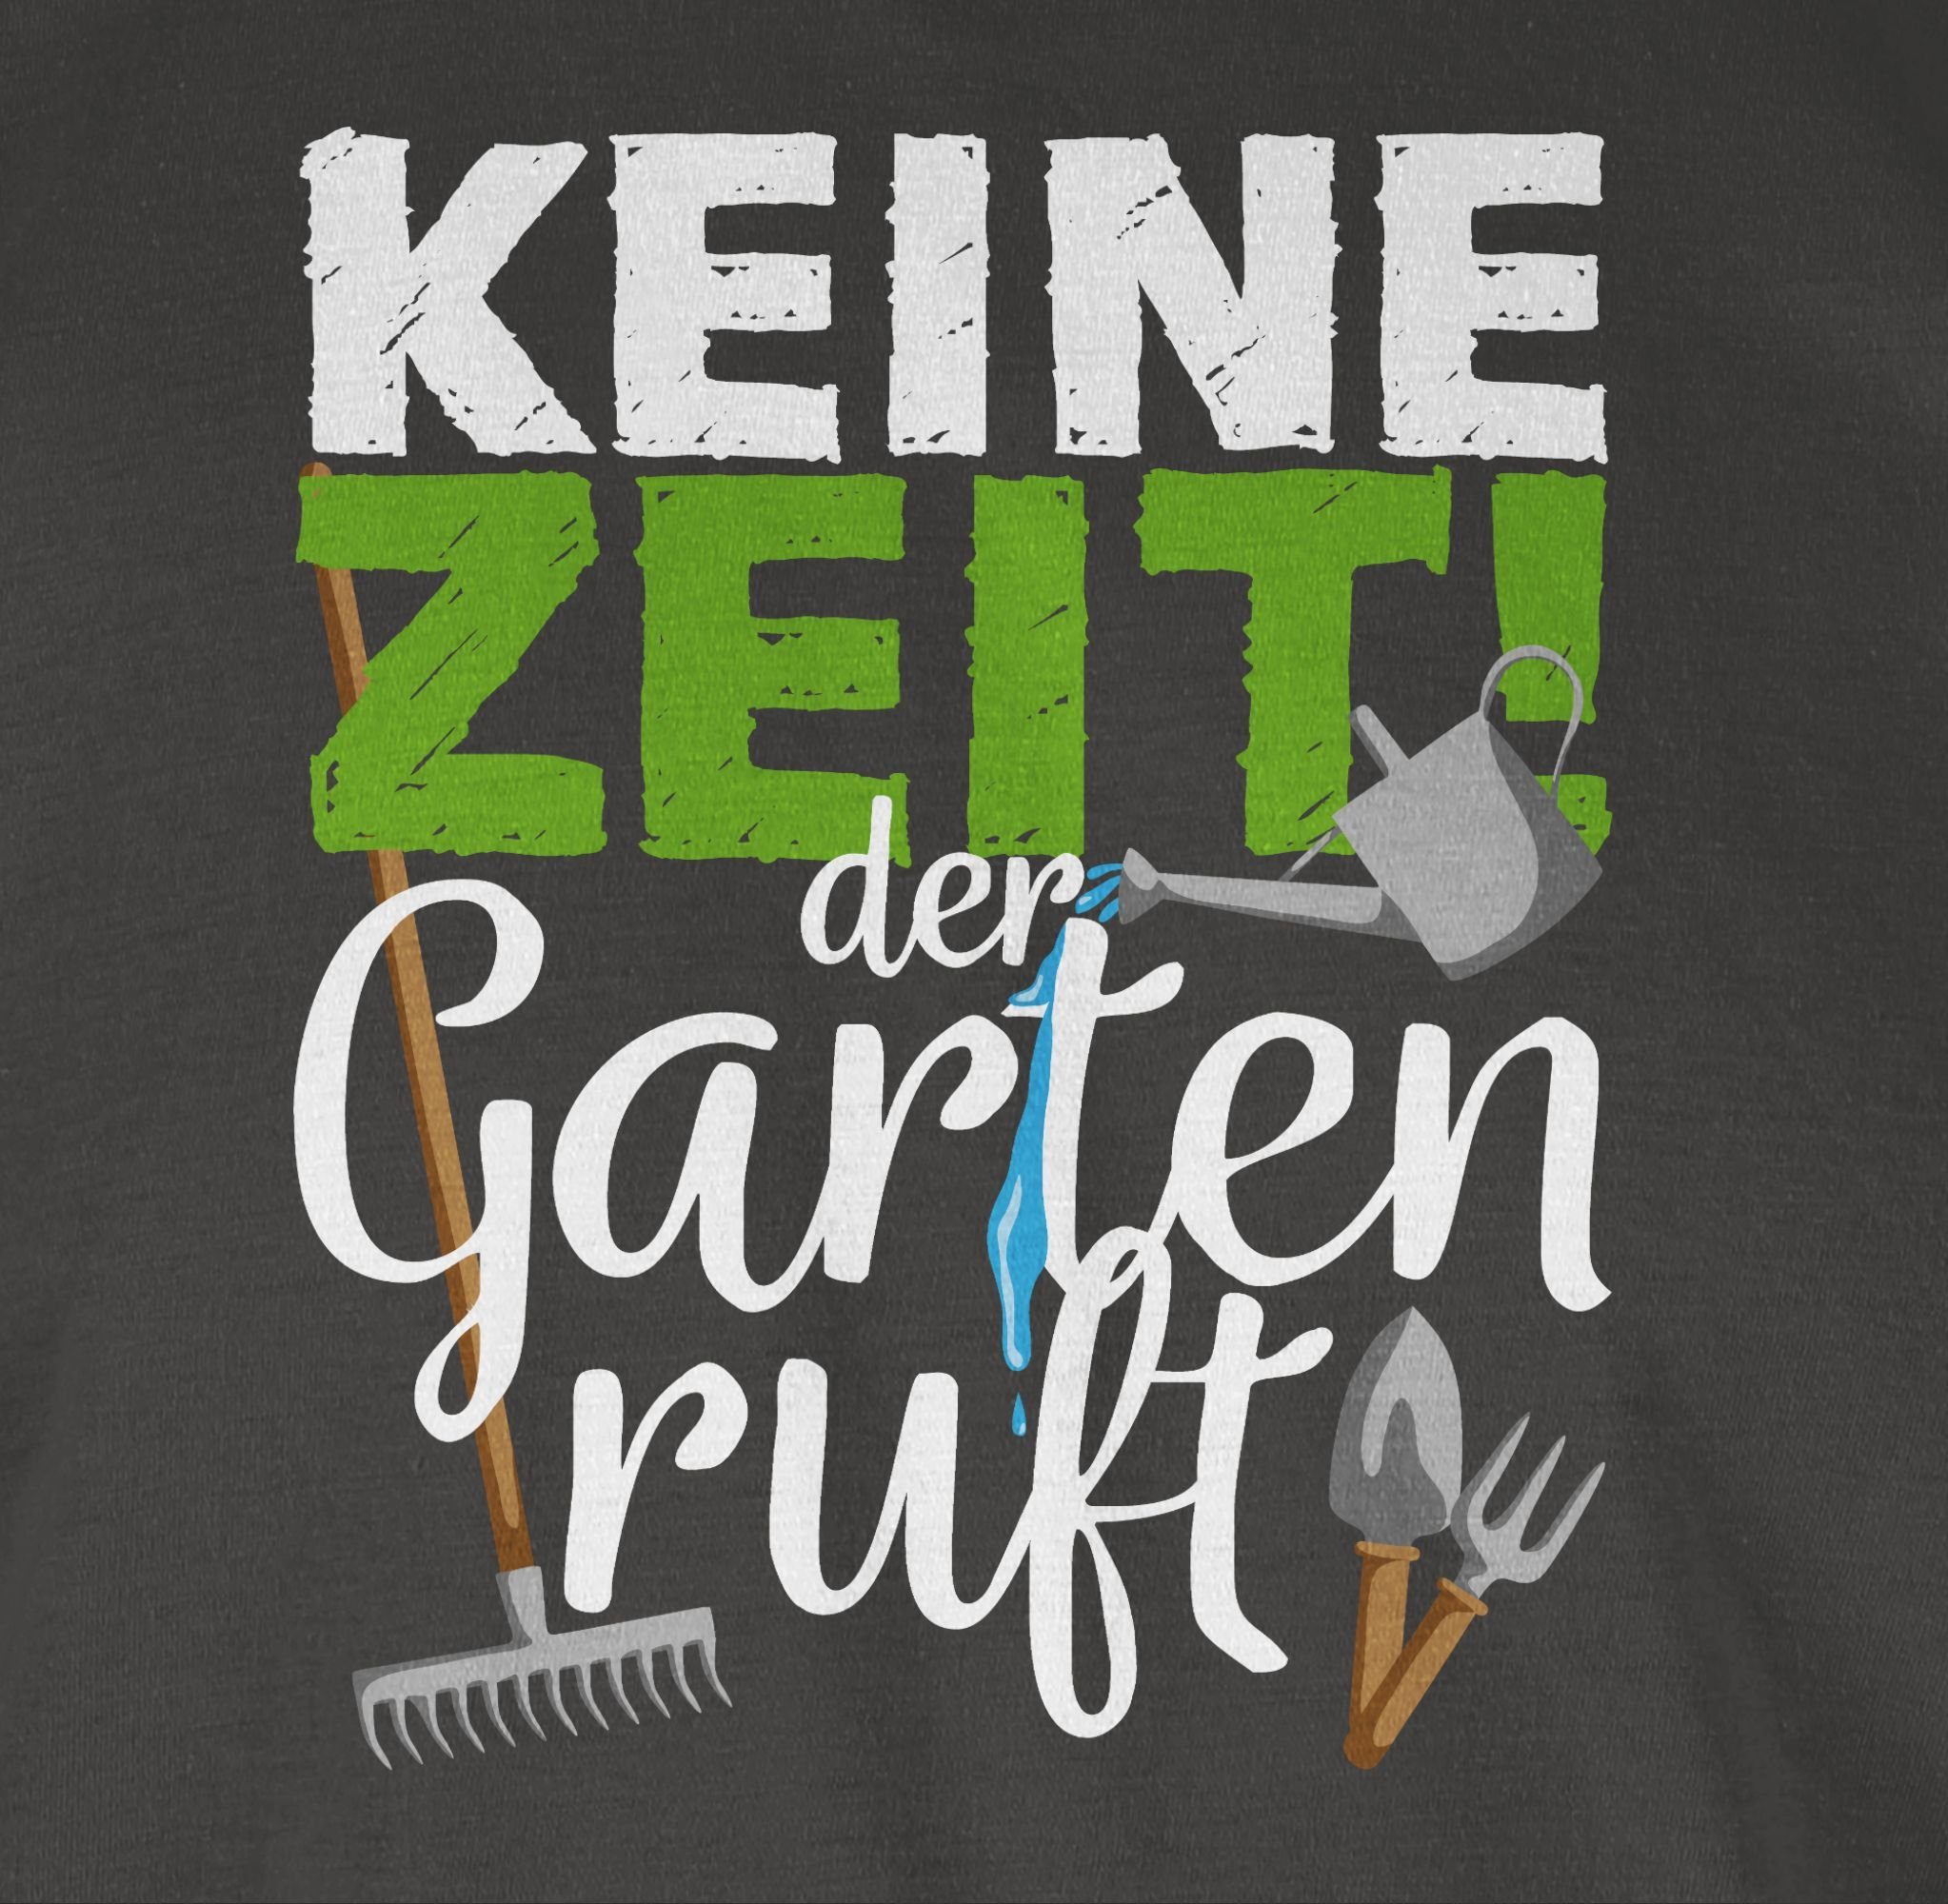 T-Shirt Zeit Garten Keine Gartengeräte Hobby - 3 Dunkelgrau Outfit ruft weiß Shirtracer der -